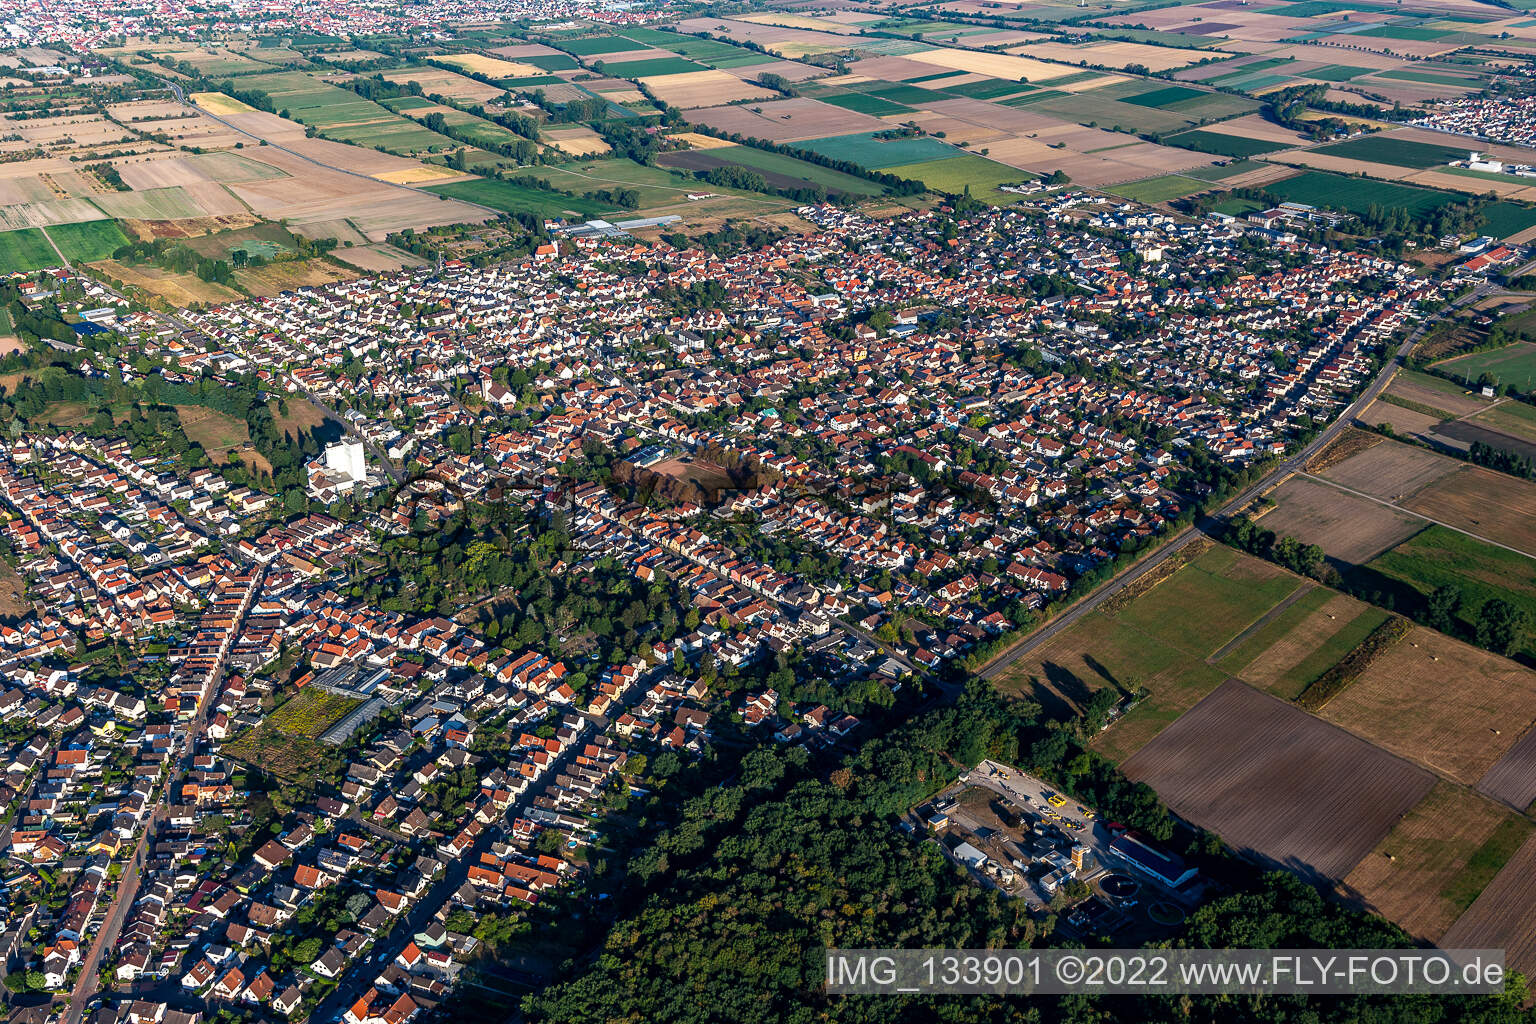 District Iggelheim in Böhl-Iggelheim in the state Rhineland-Palatinate, Germany from above